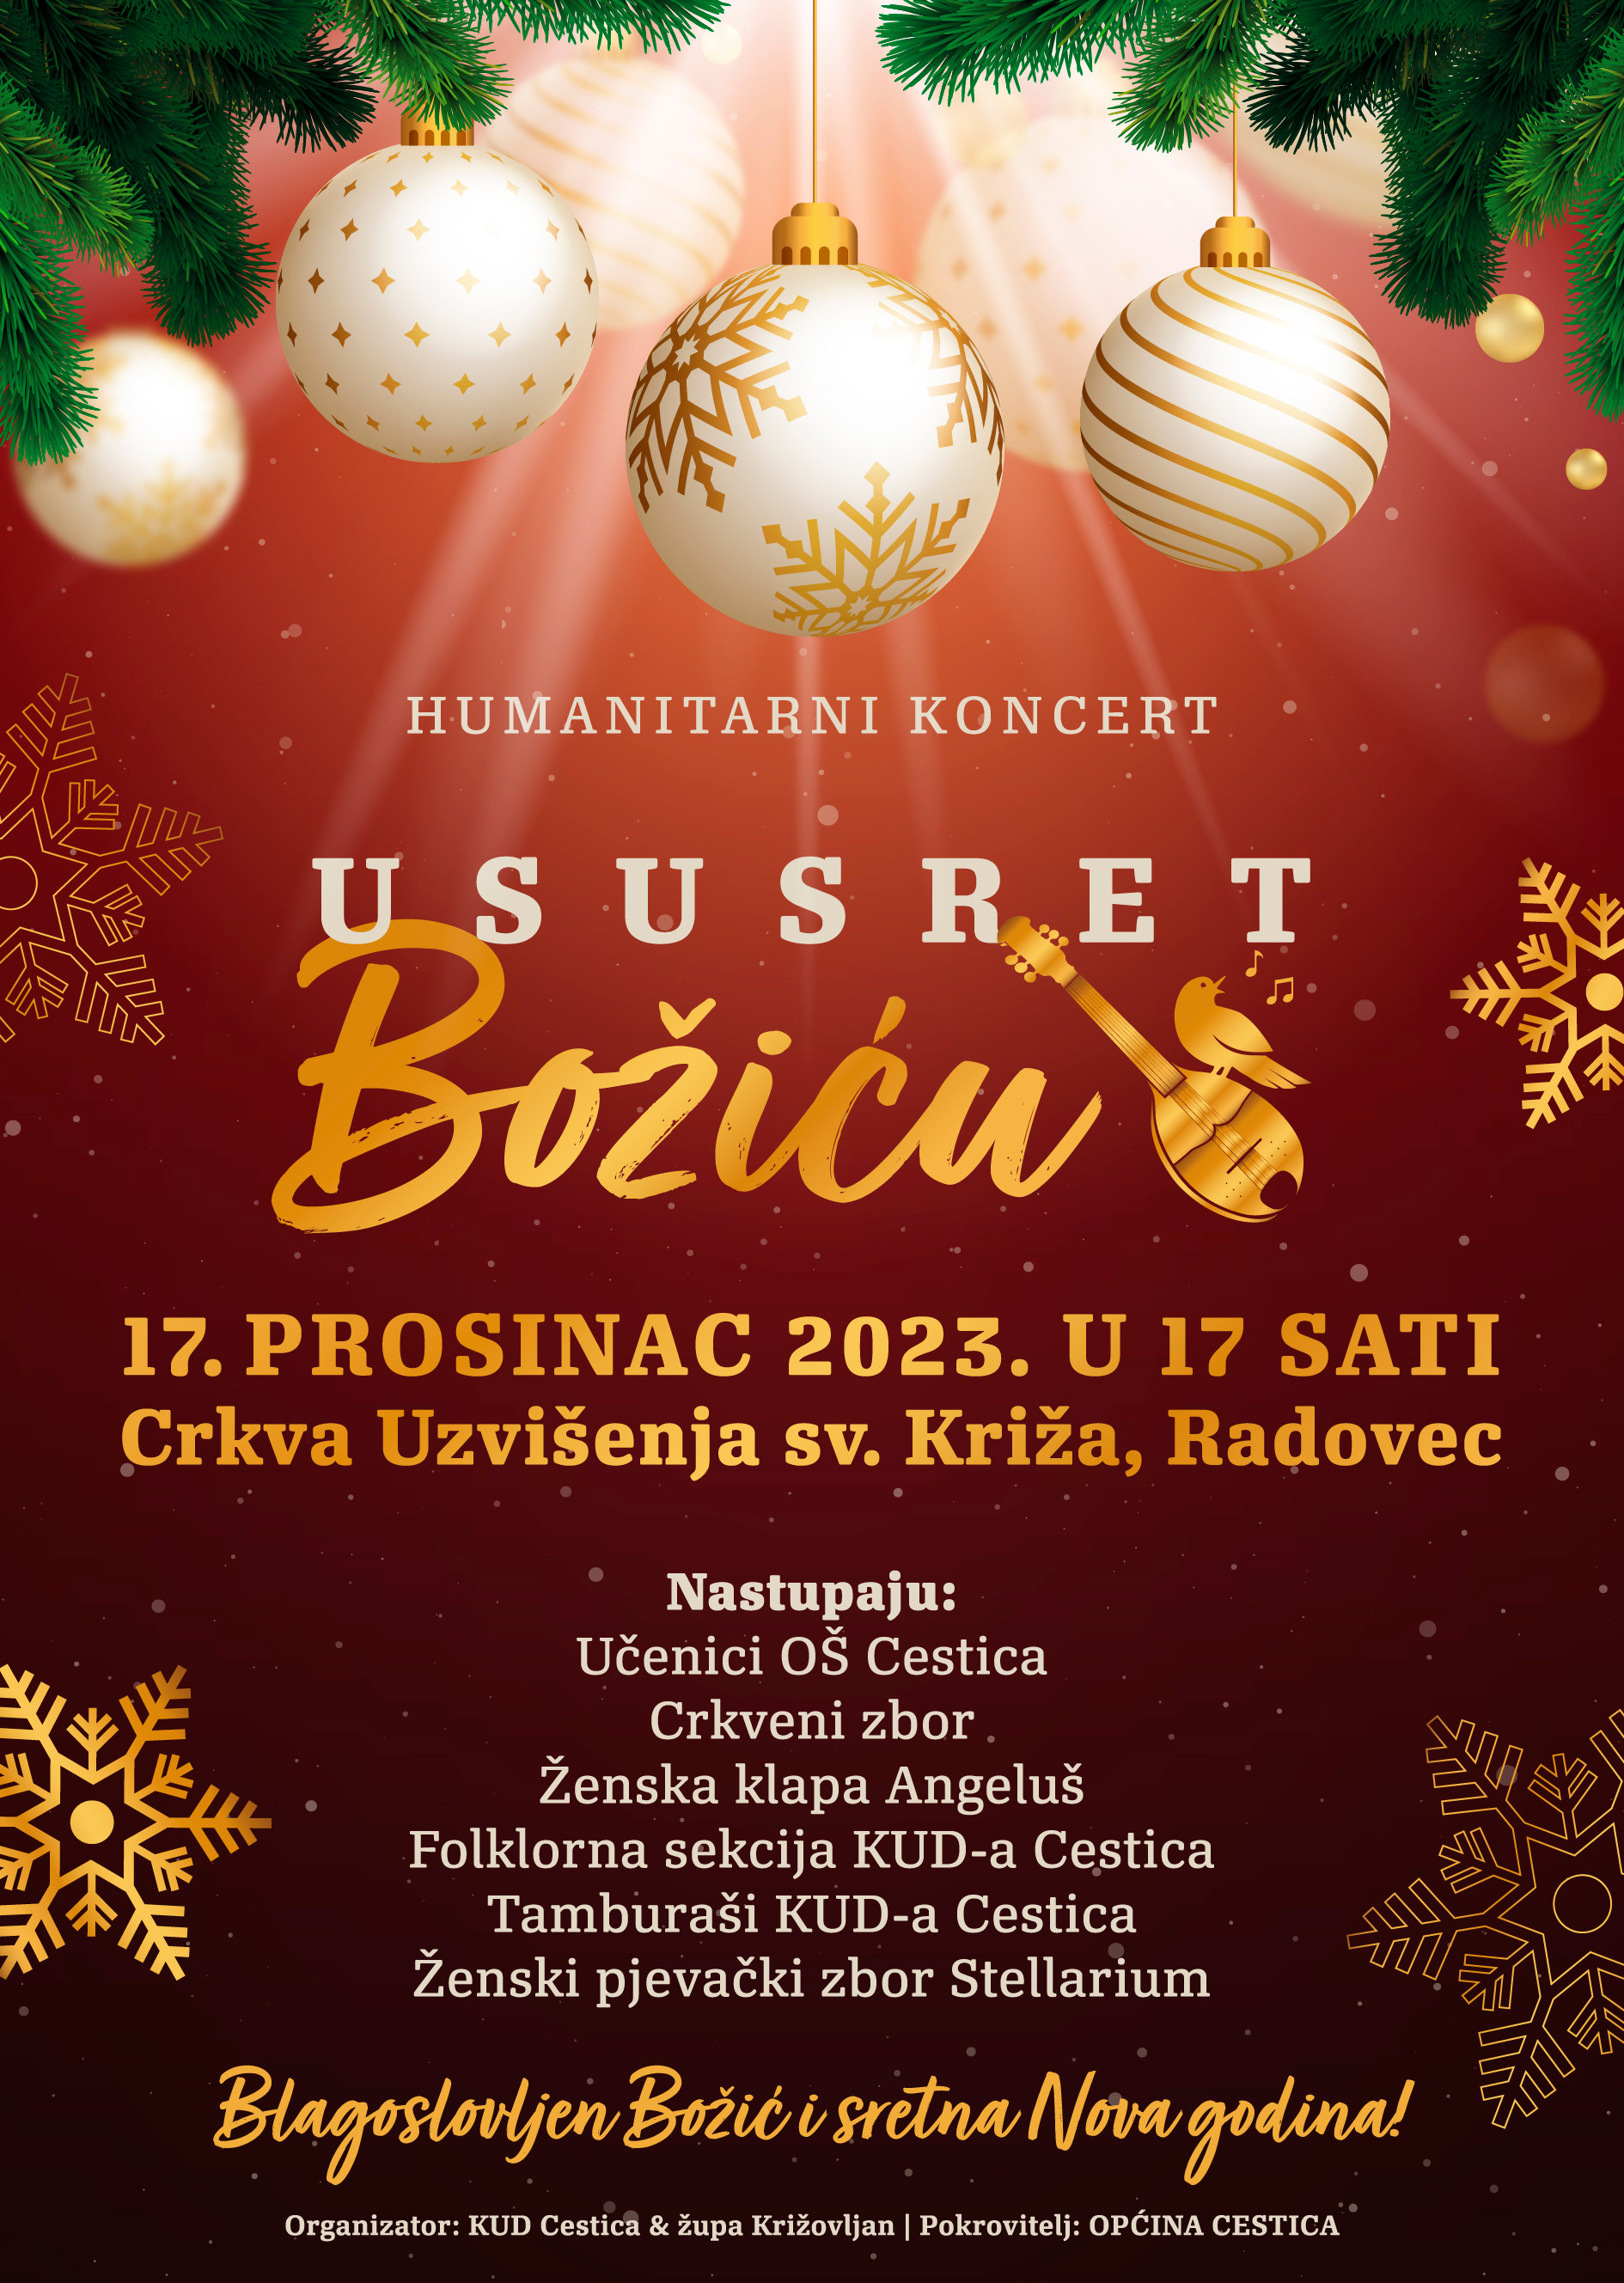 cestica_humanitarni_koncert_bozic_program_16162023.jpg